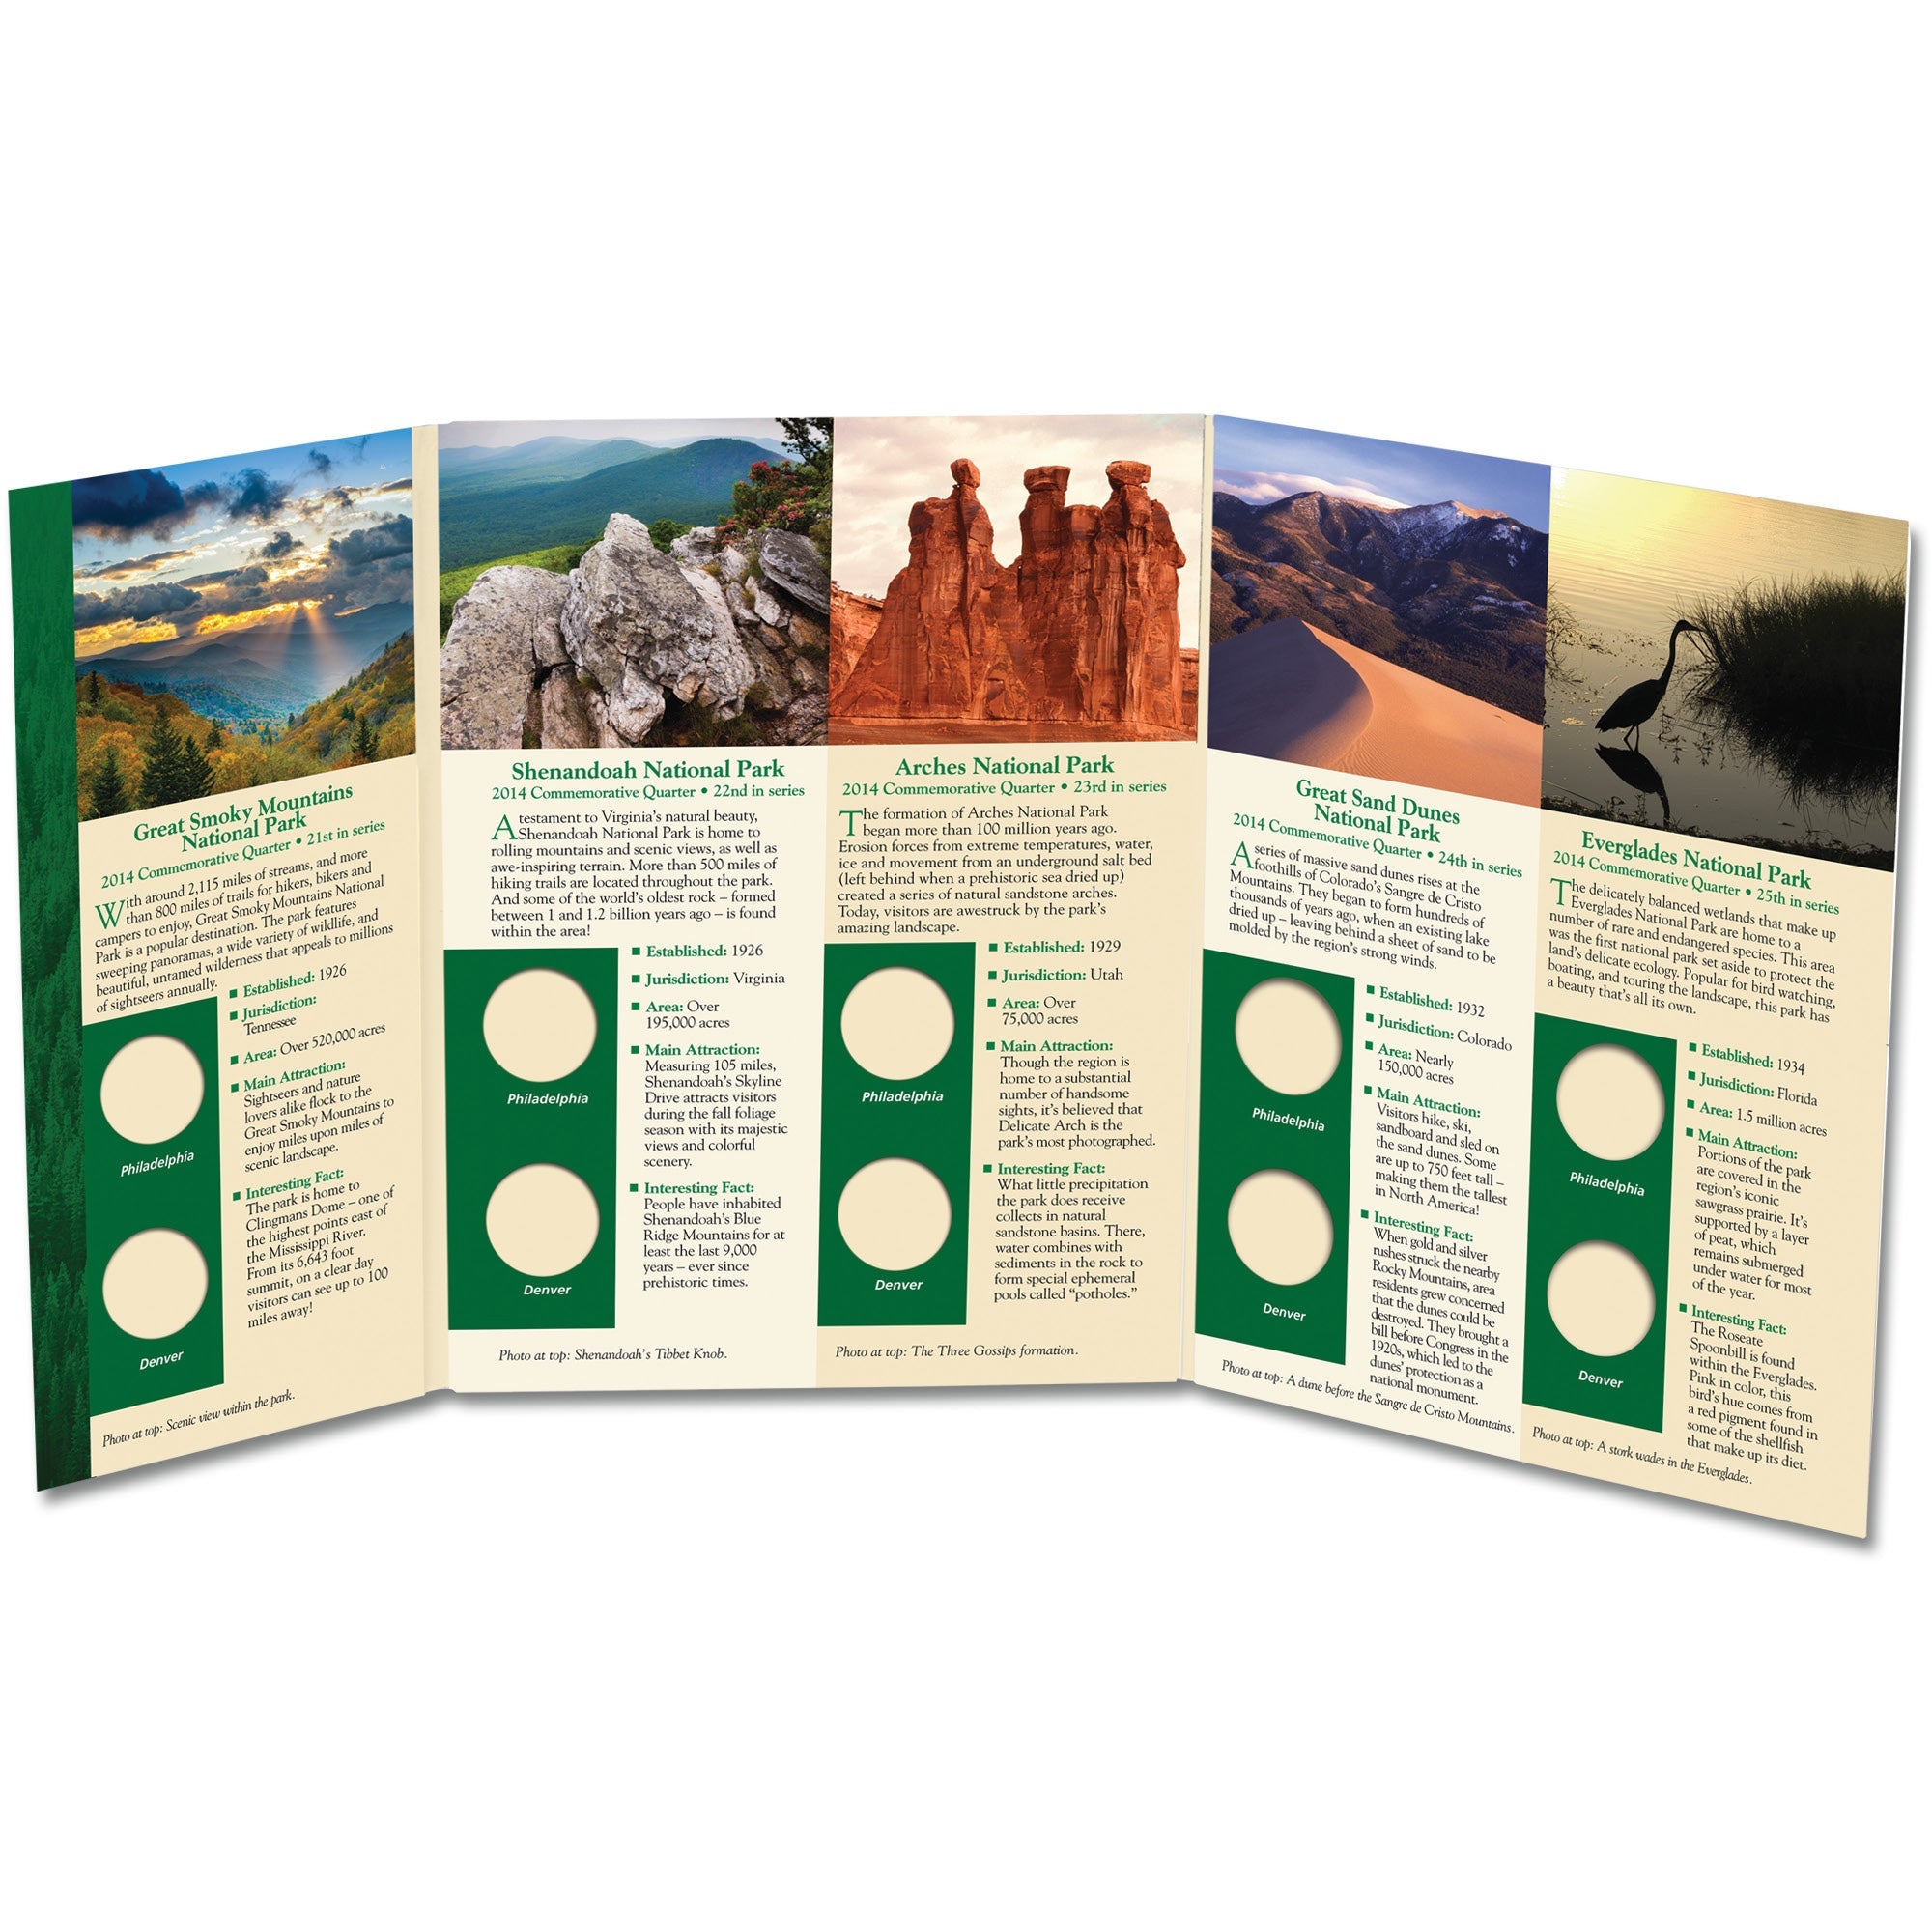 2014 America's National Park Quarter Series Colorful Folder Littleton